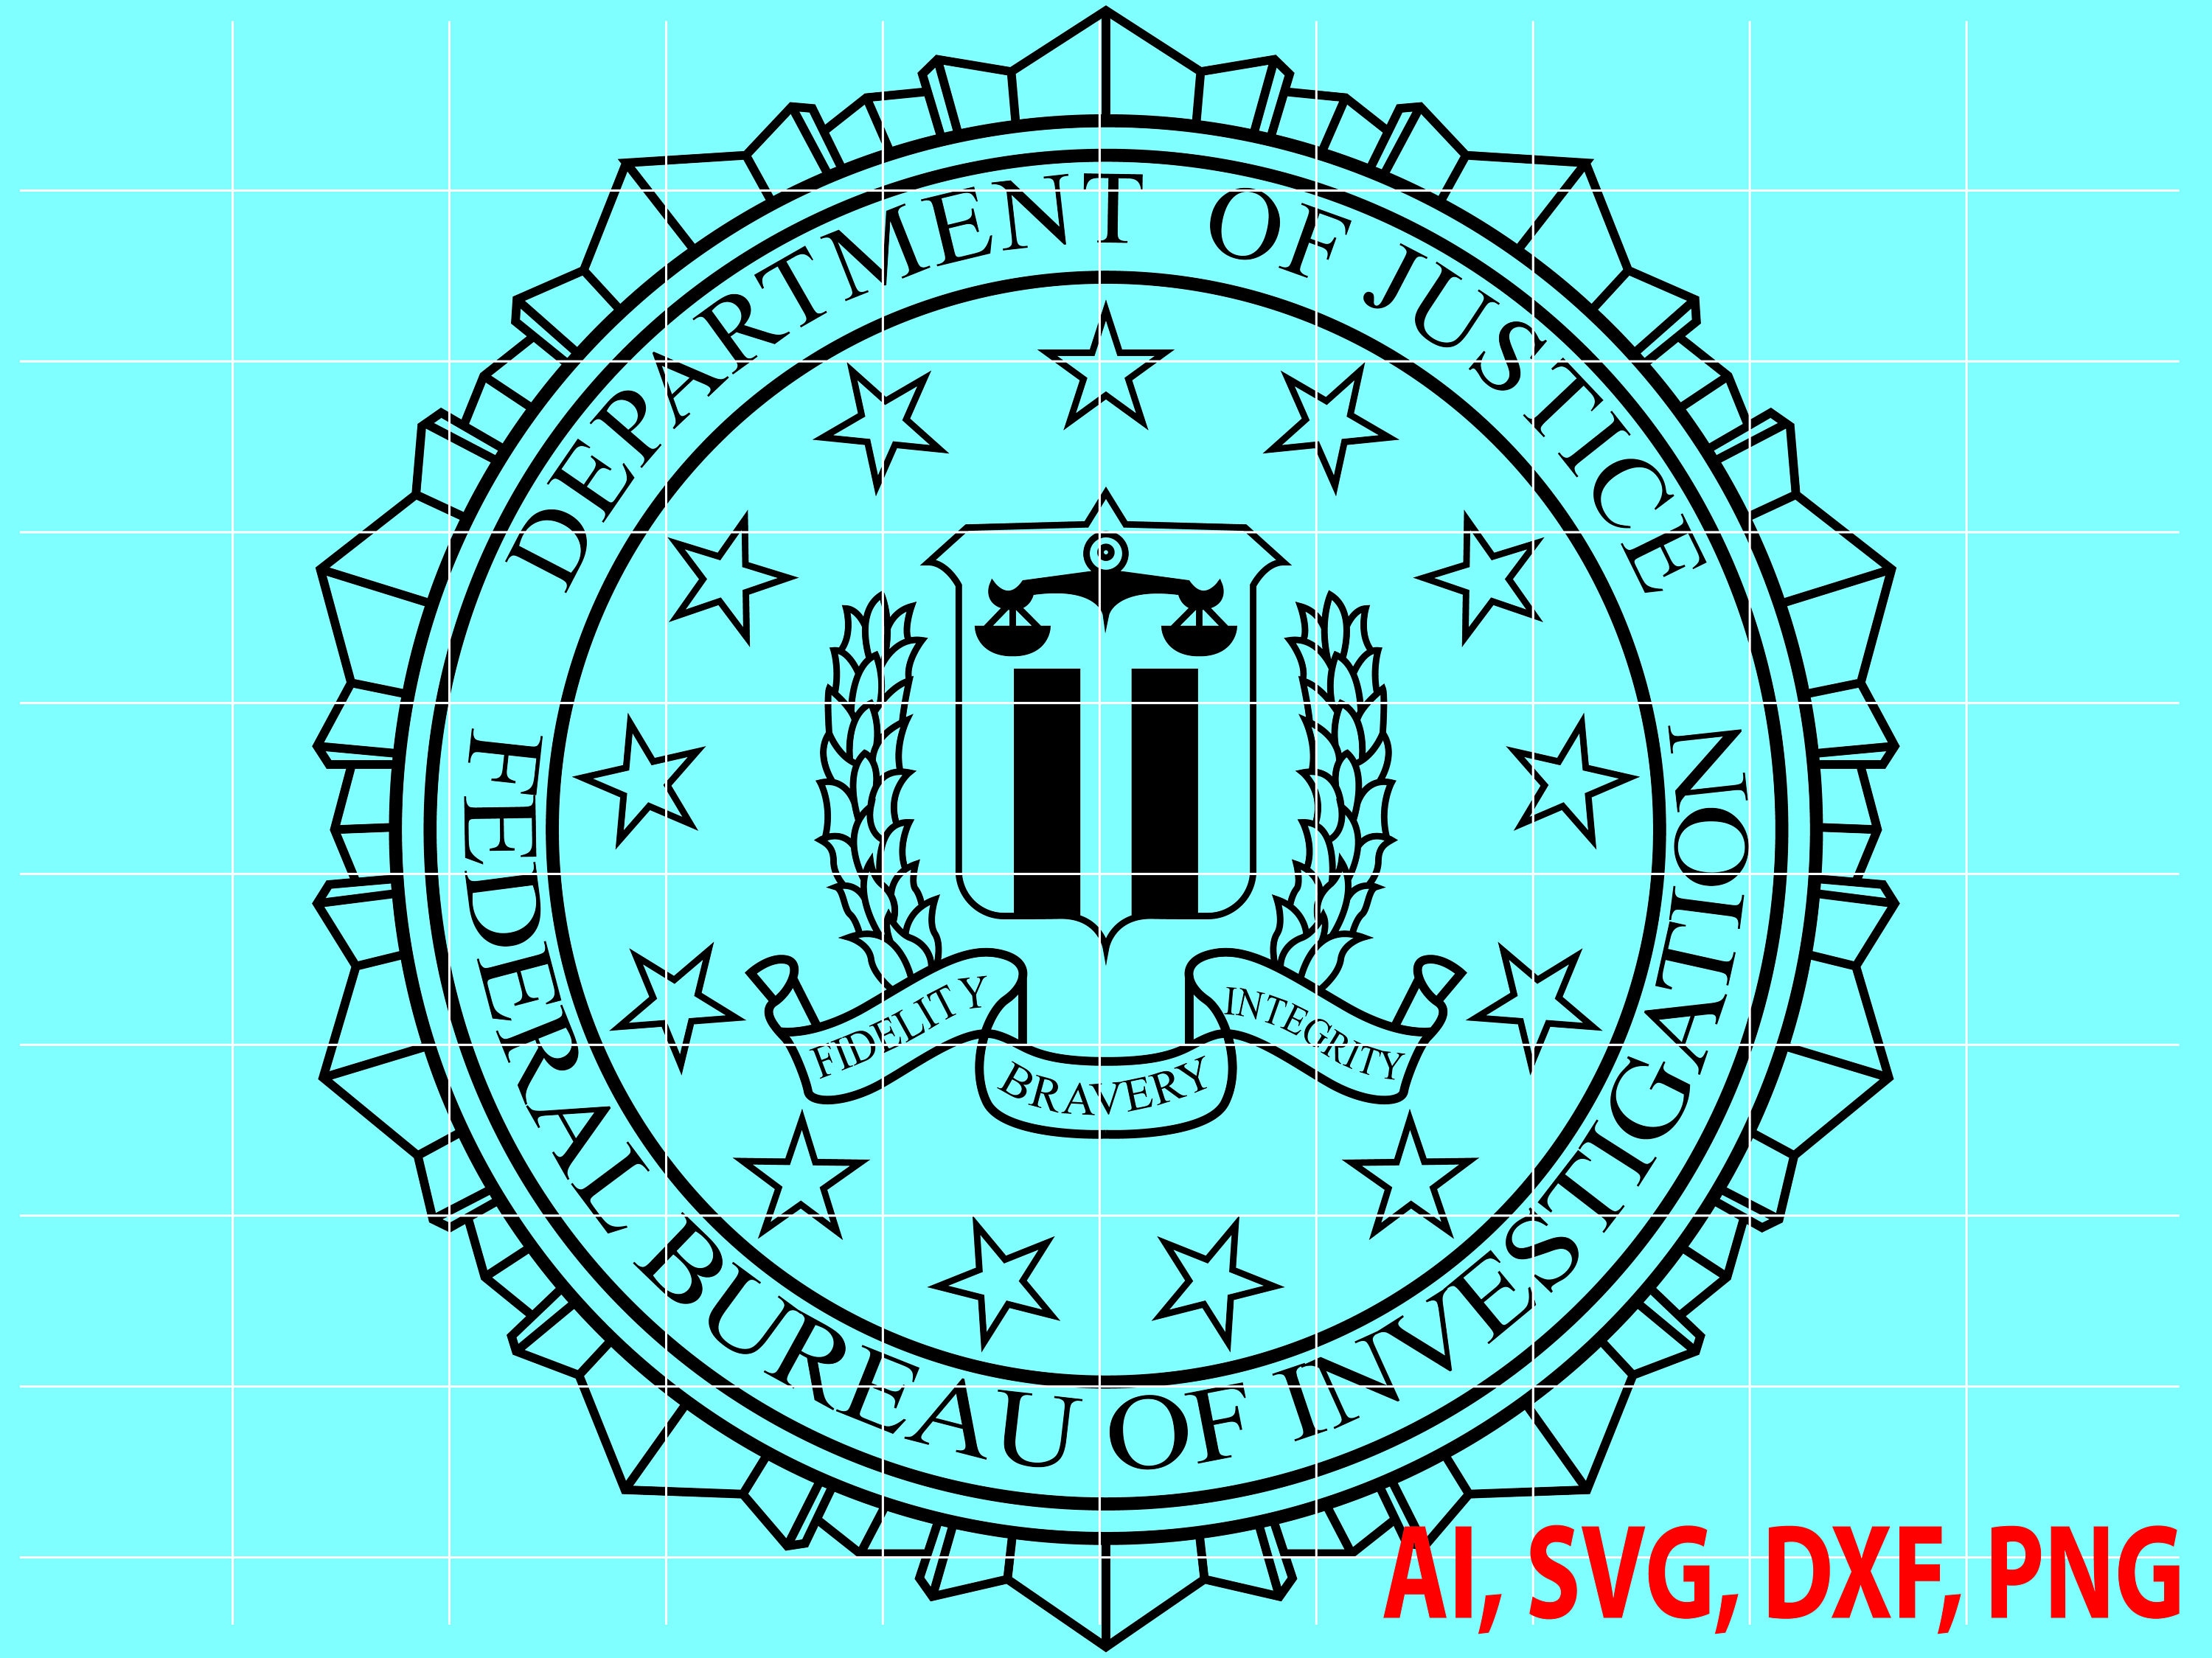 FBI Logo Federal Bureau of Investigations Department of Justice Seal  Digital Vector .ai, .svg, .png